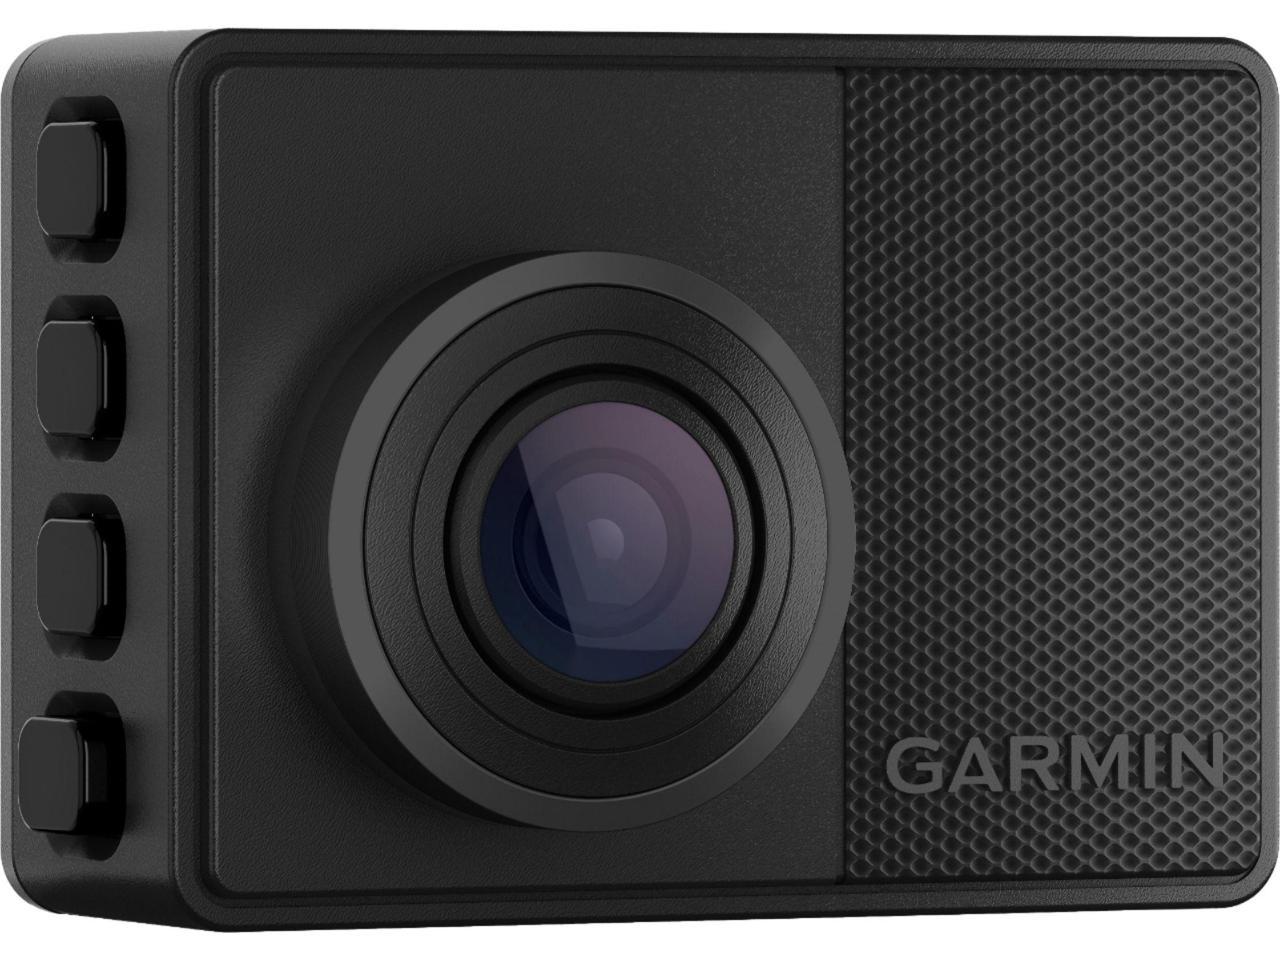 Garmin 67W 1440p Dash Cam, Black #010-02505-05 - image 7 of 21